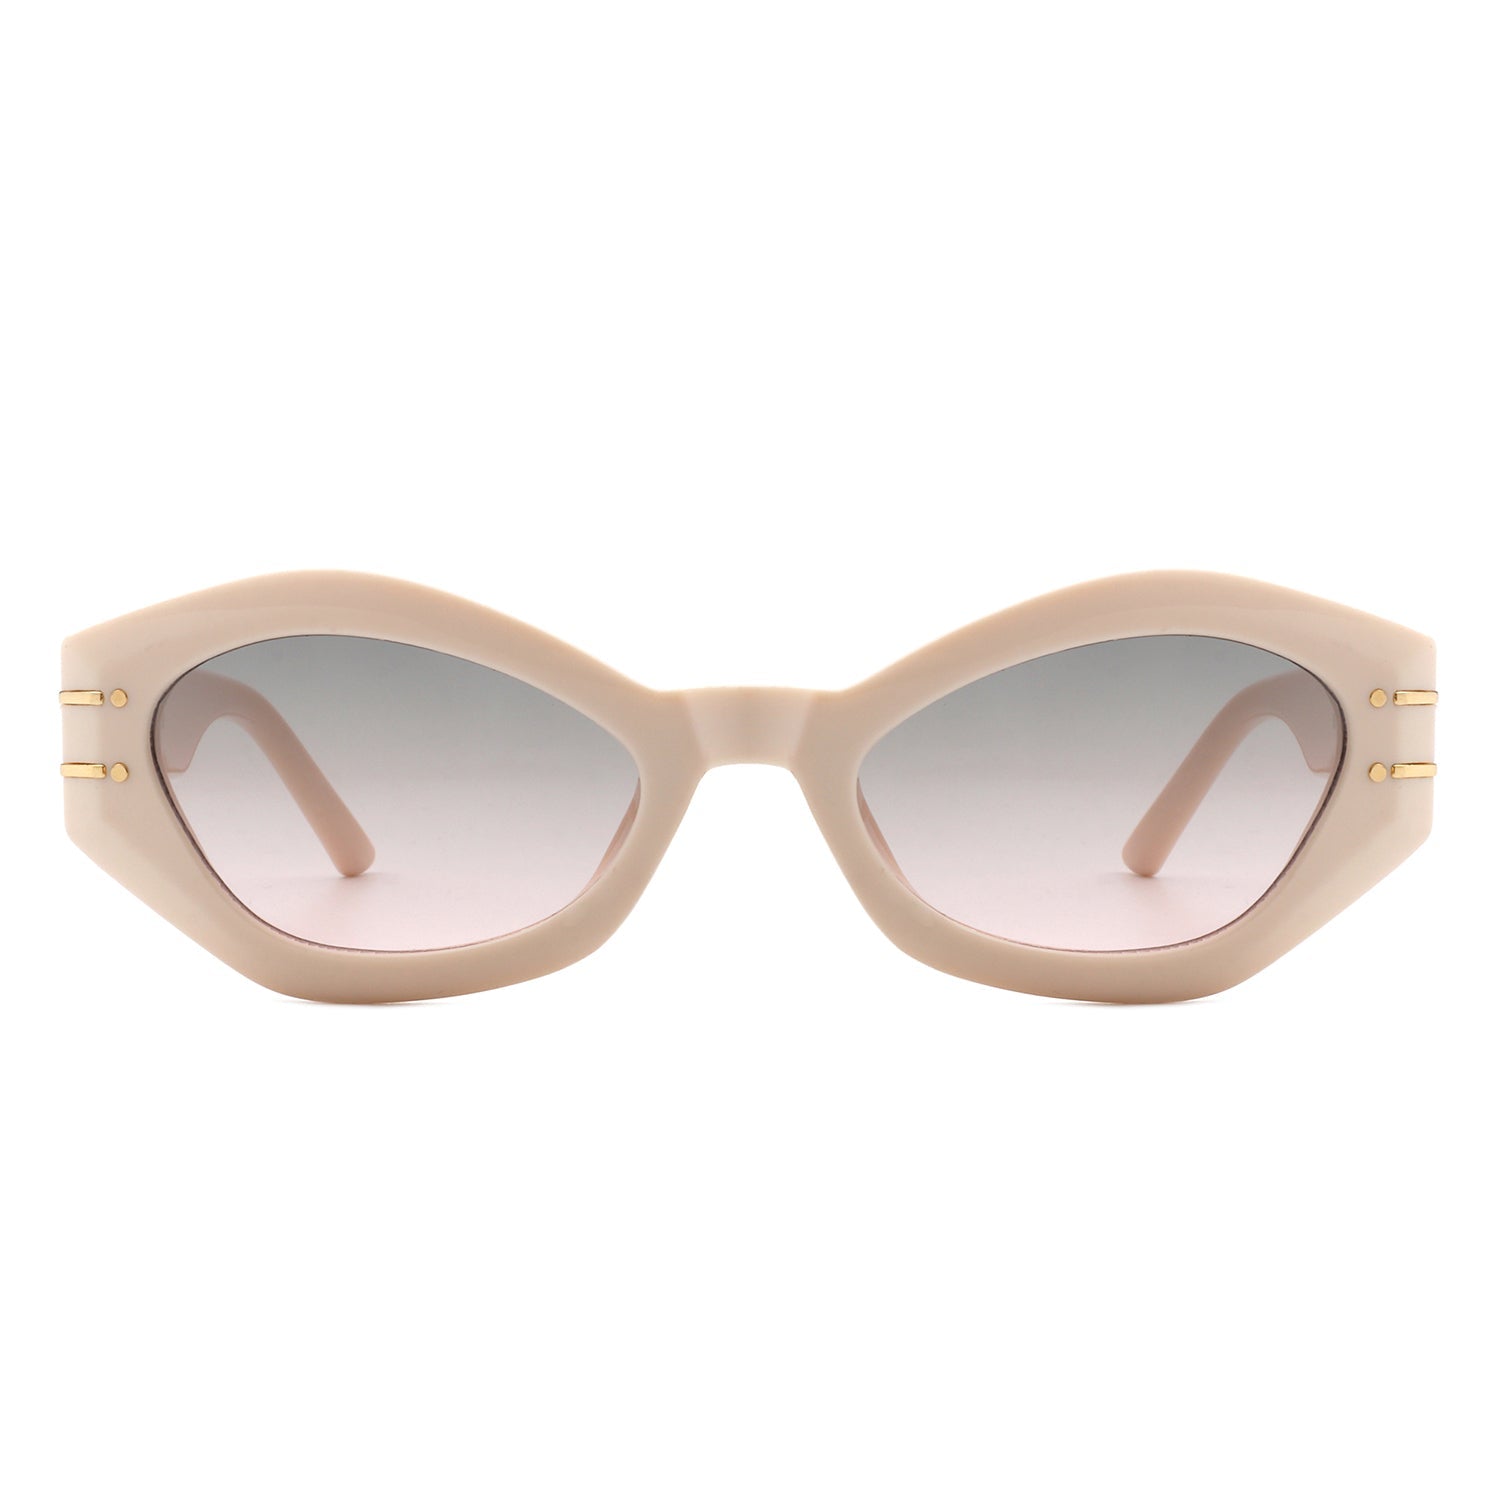 Elysiant - Geometric Oval Slim Fashion Round Cat Eye Sunglasses